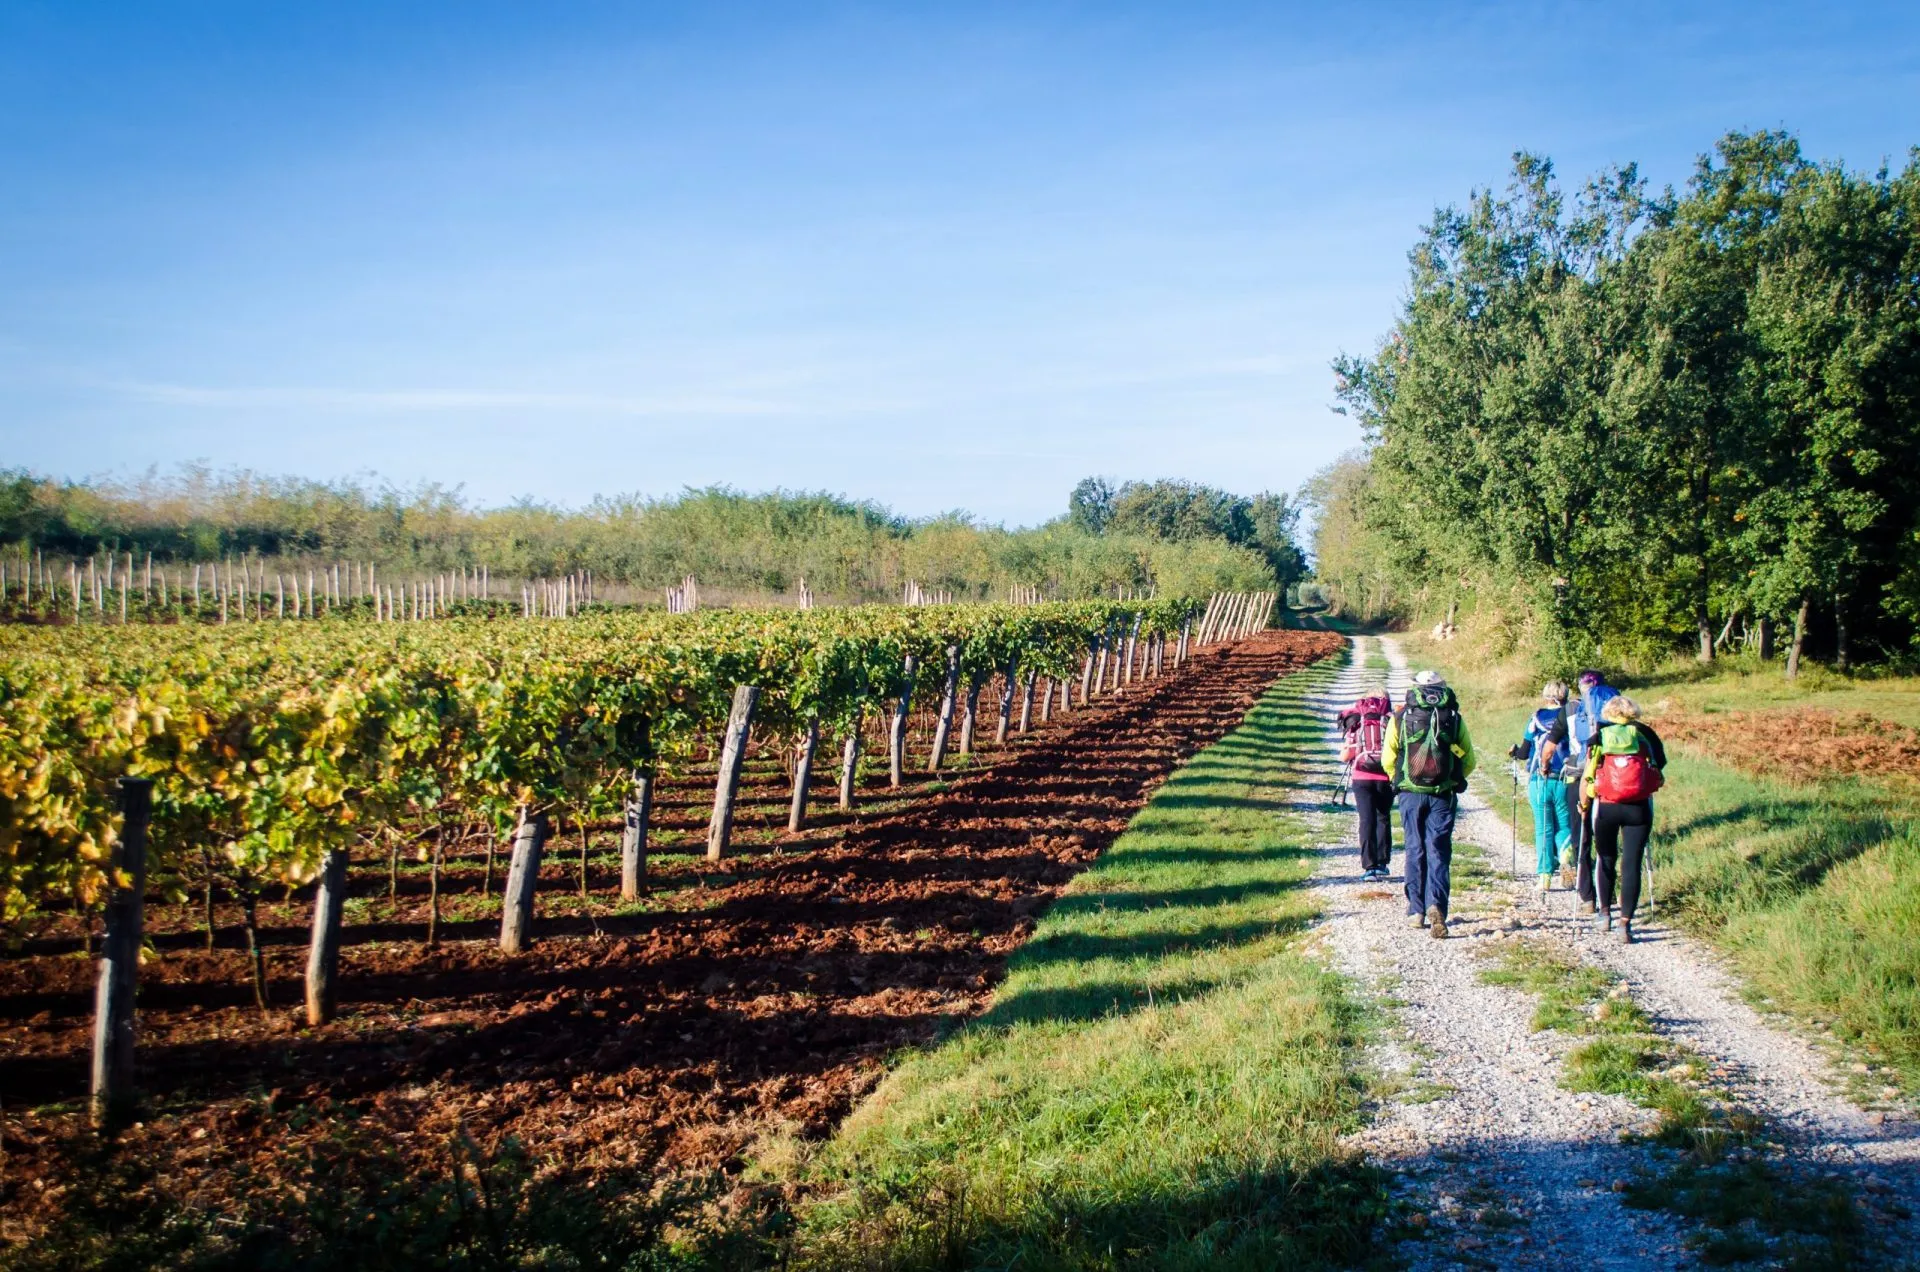 Walking between the vineyards